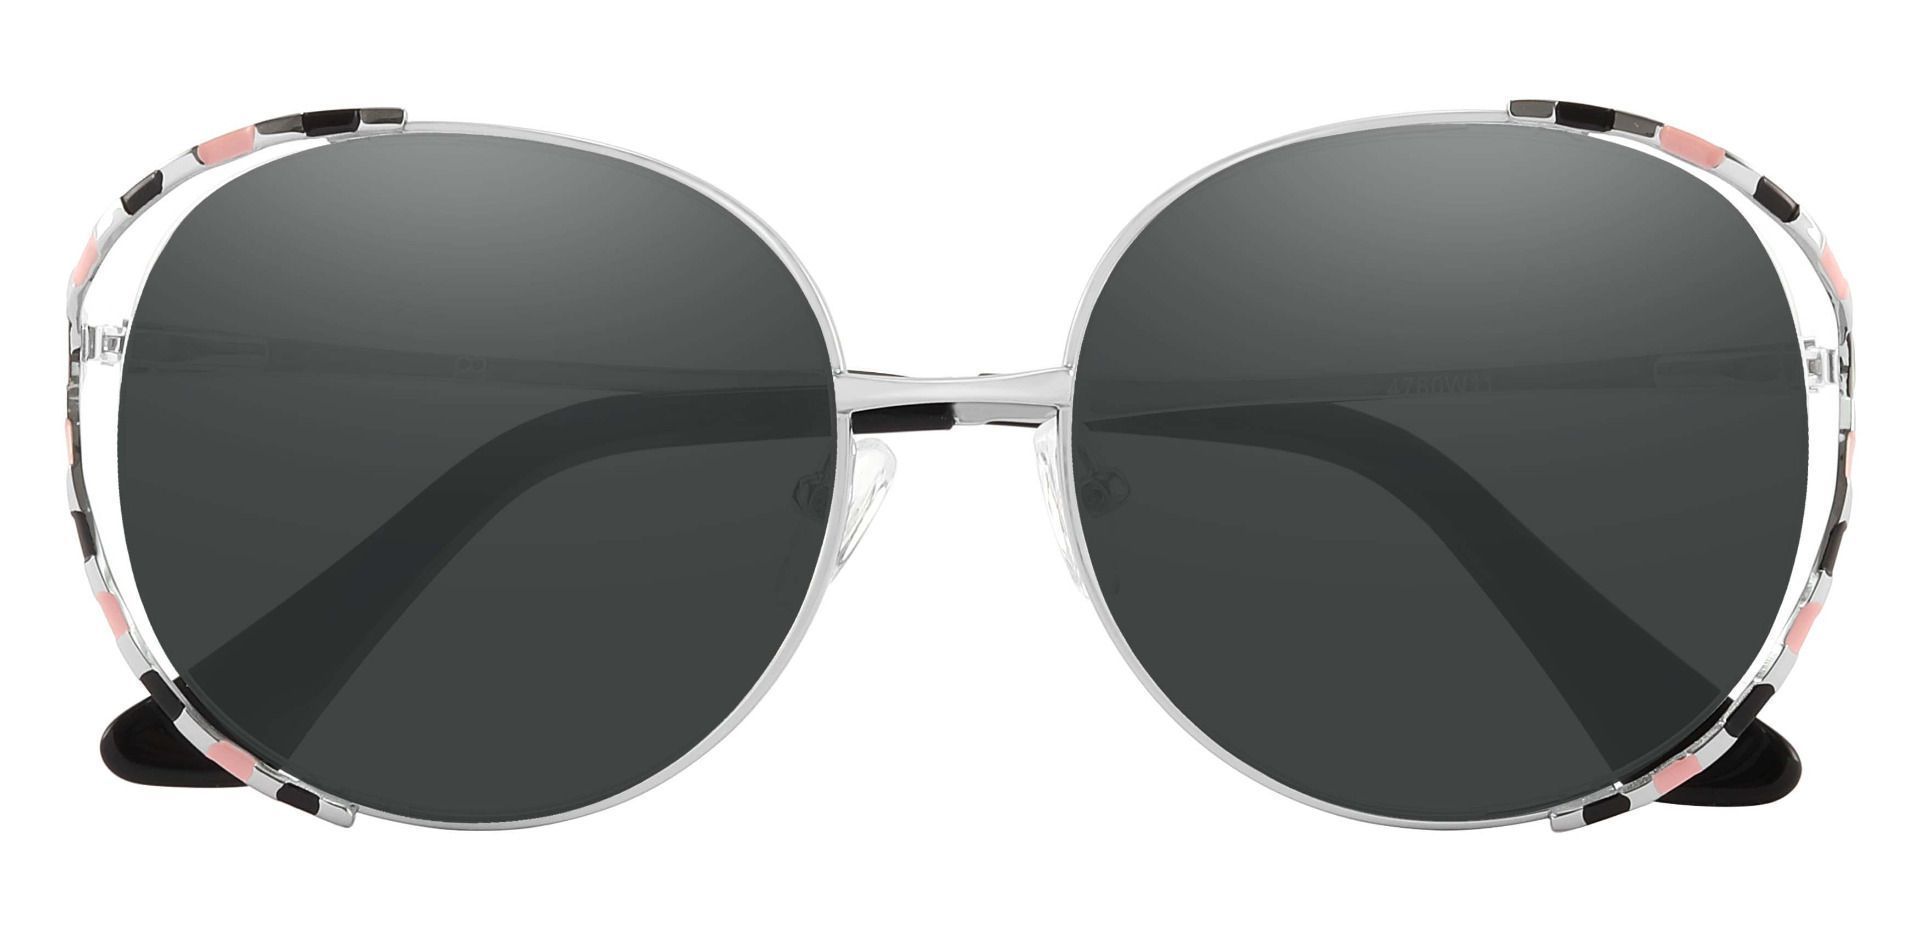 Dorothy Oval Reading Sunglasses - Black Frame With Gray Lenses